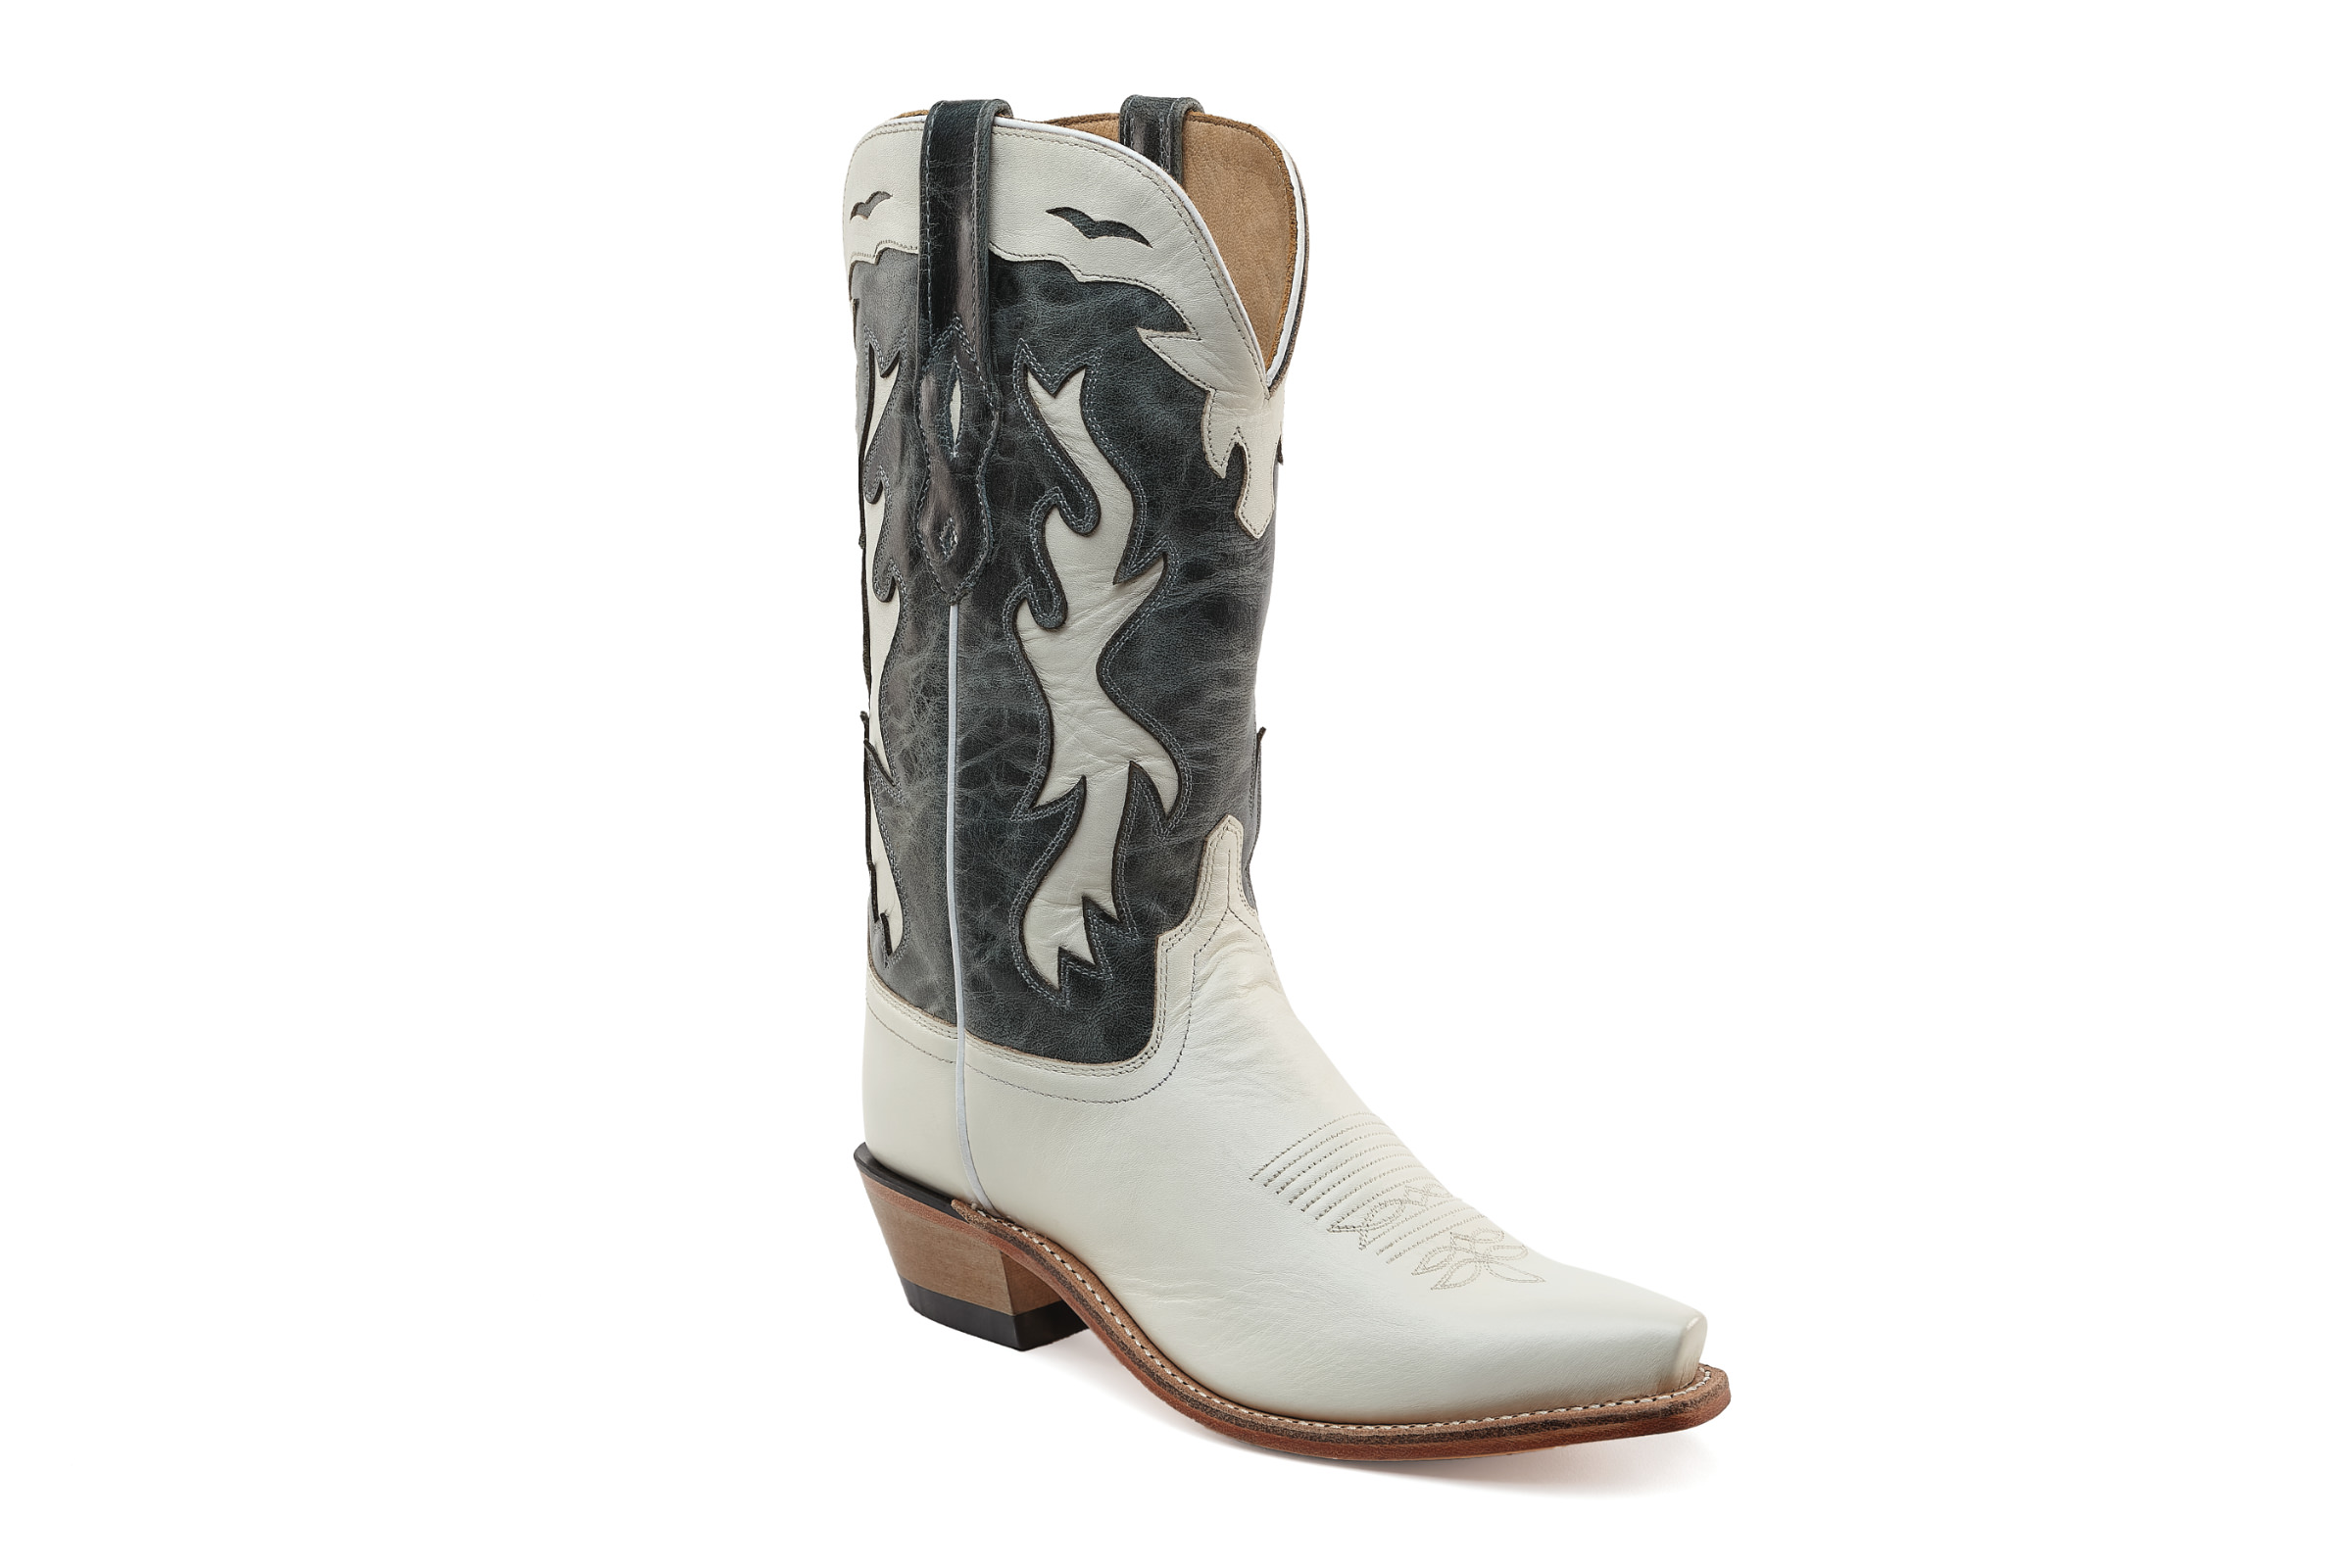 Cowboy boots for women LF1626E, Silver Oaks, white/blue